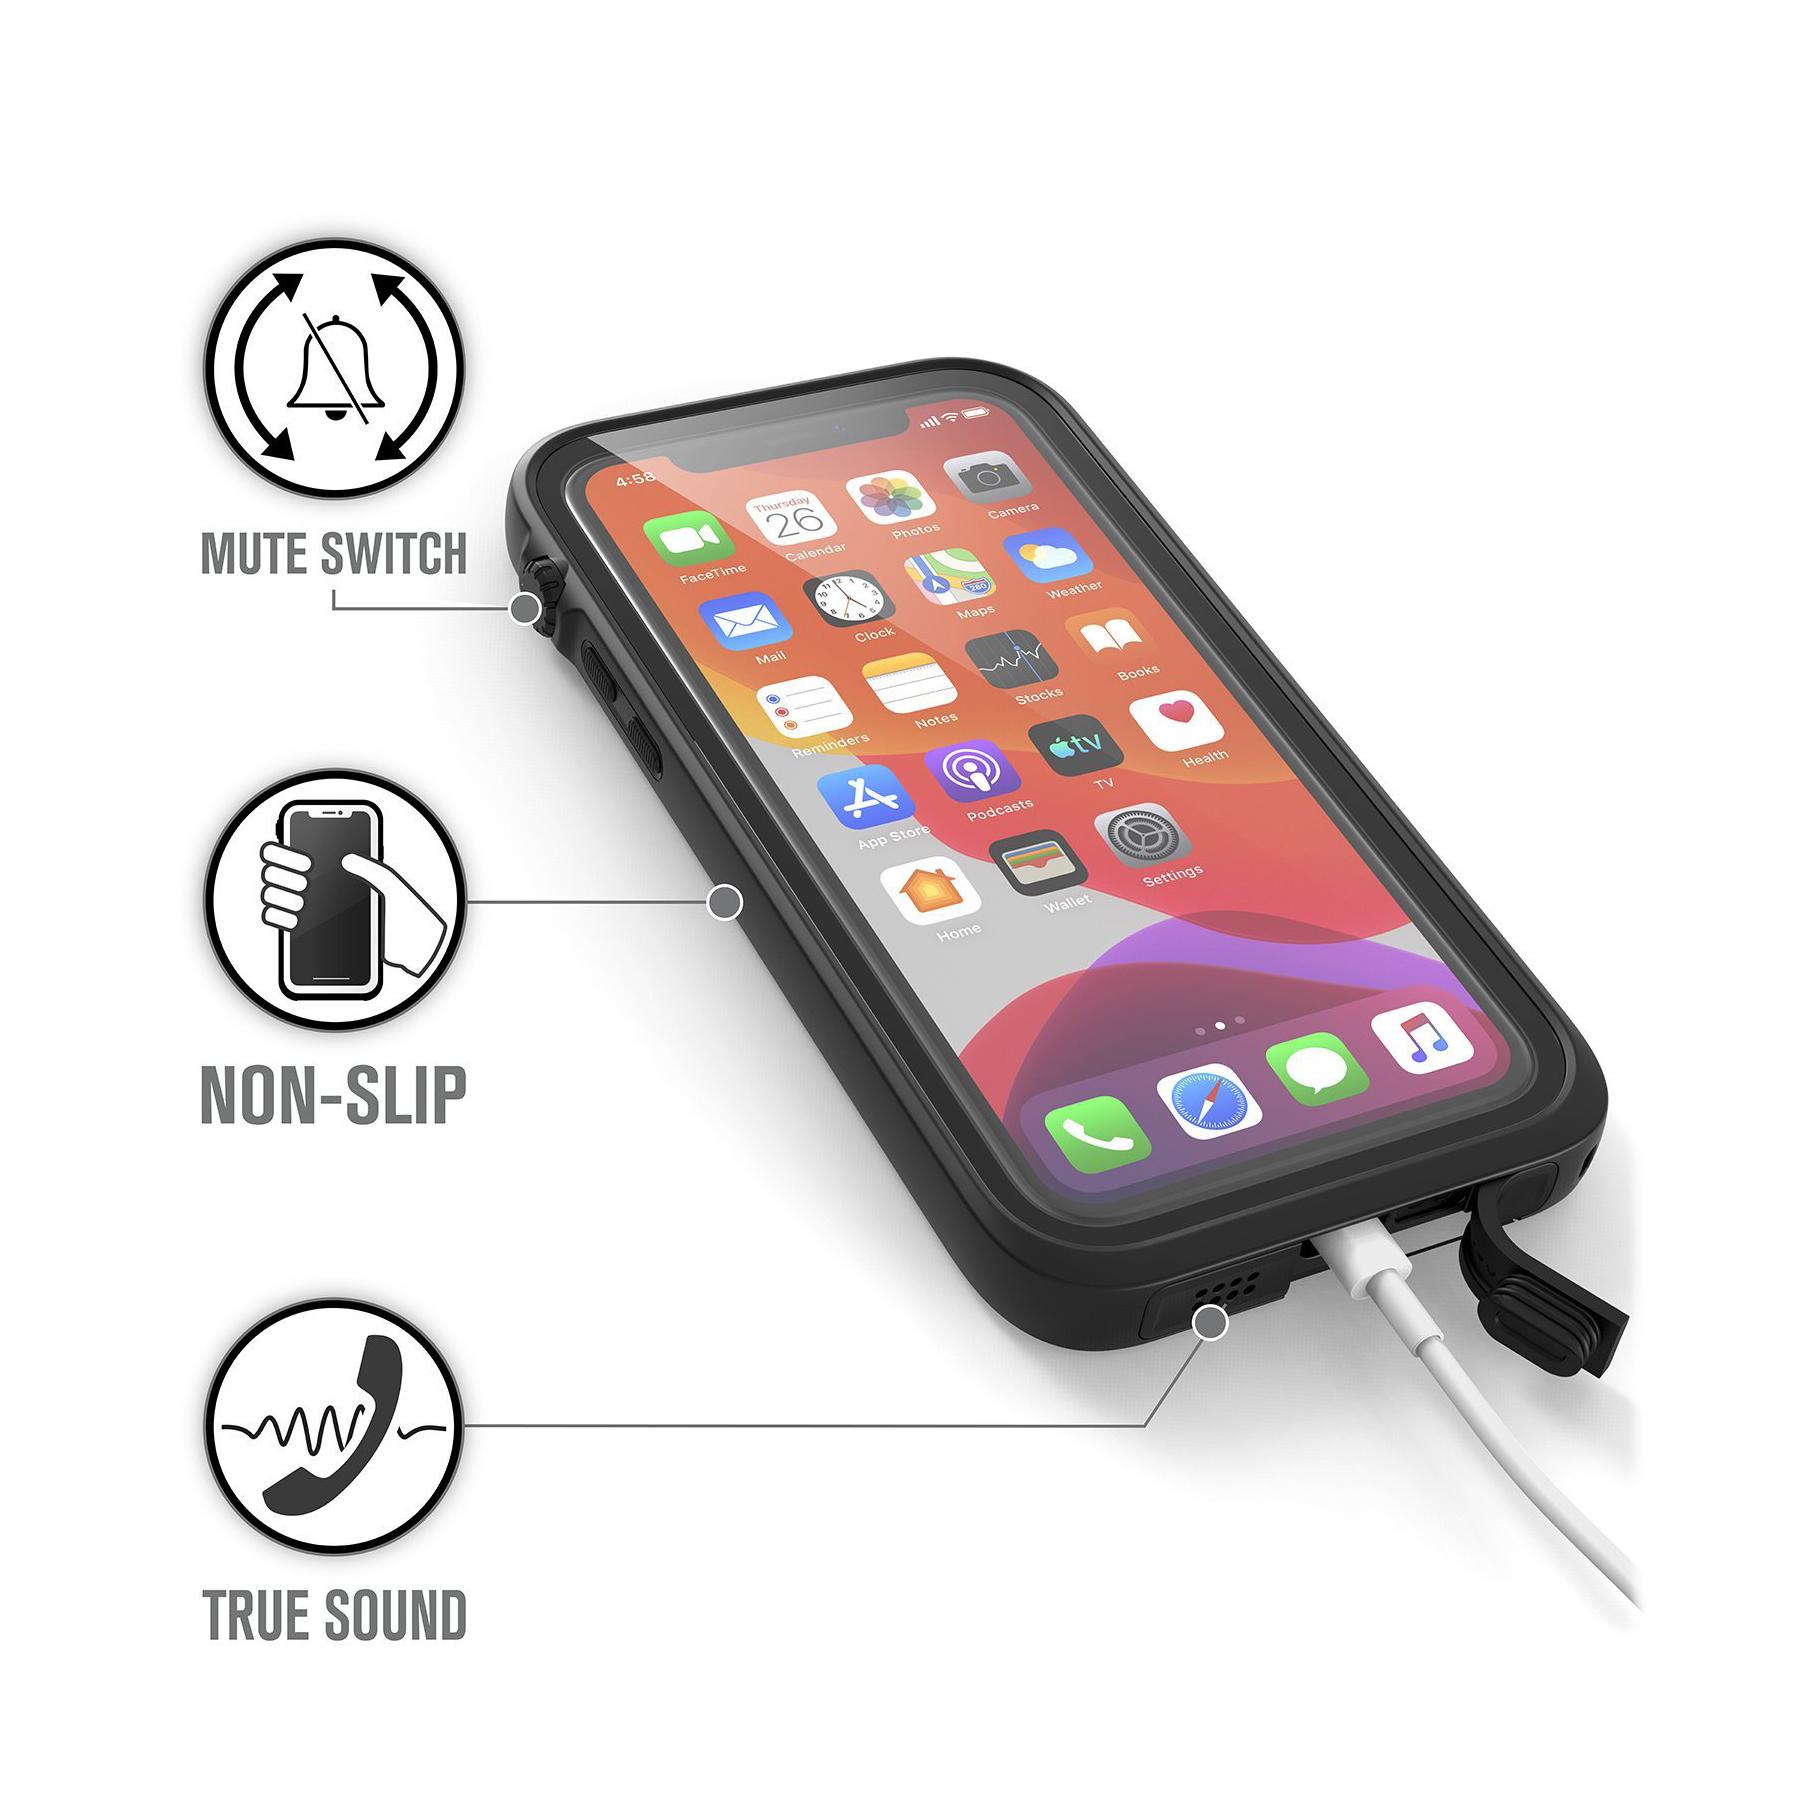 Catalyst Waterproof iPhone 11 Pro Case - Stealth Black